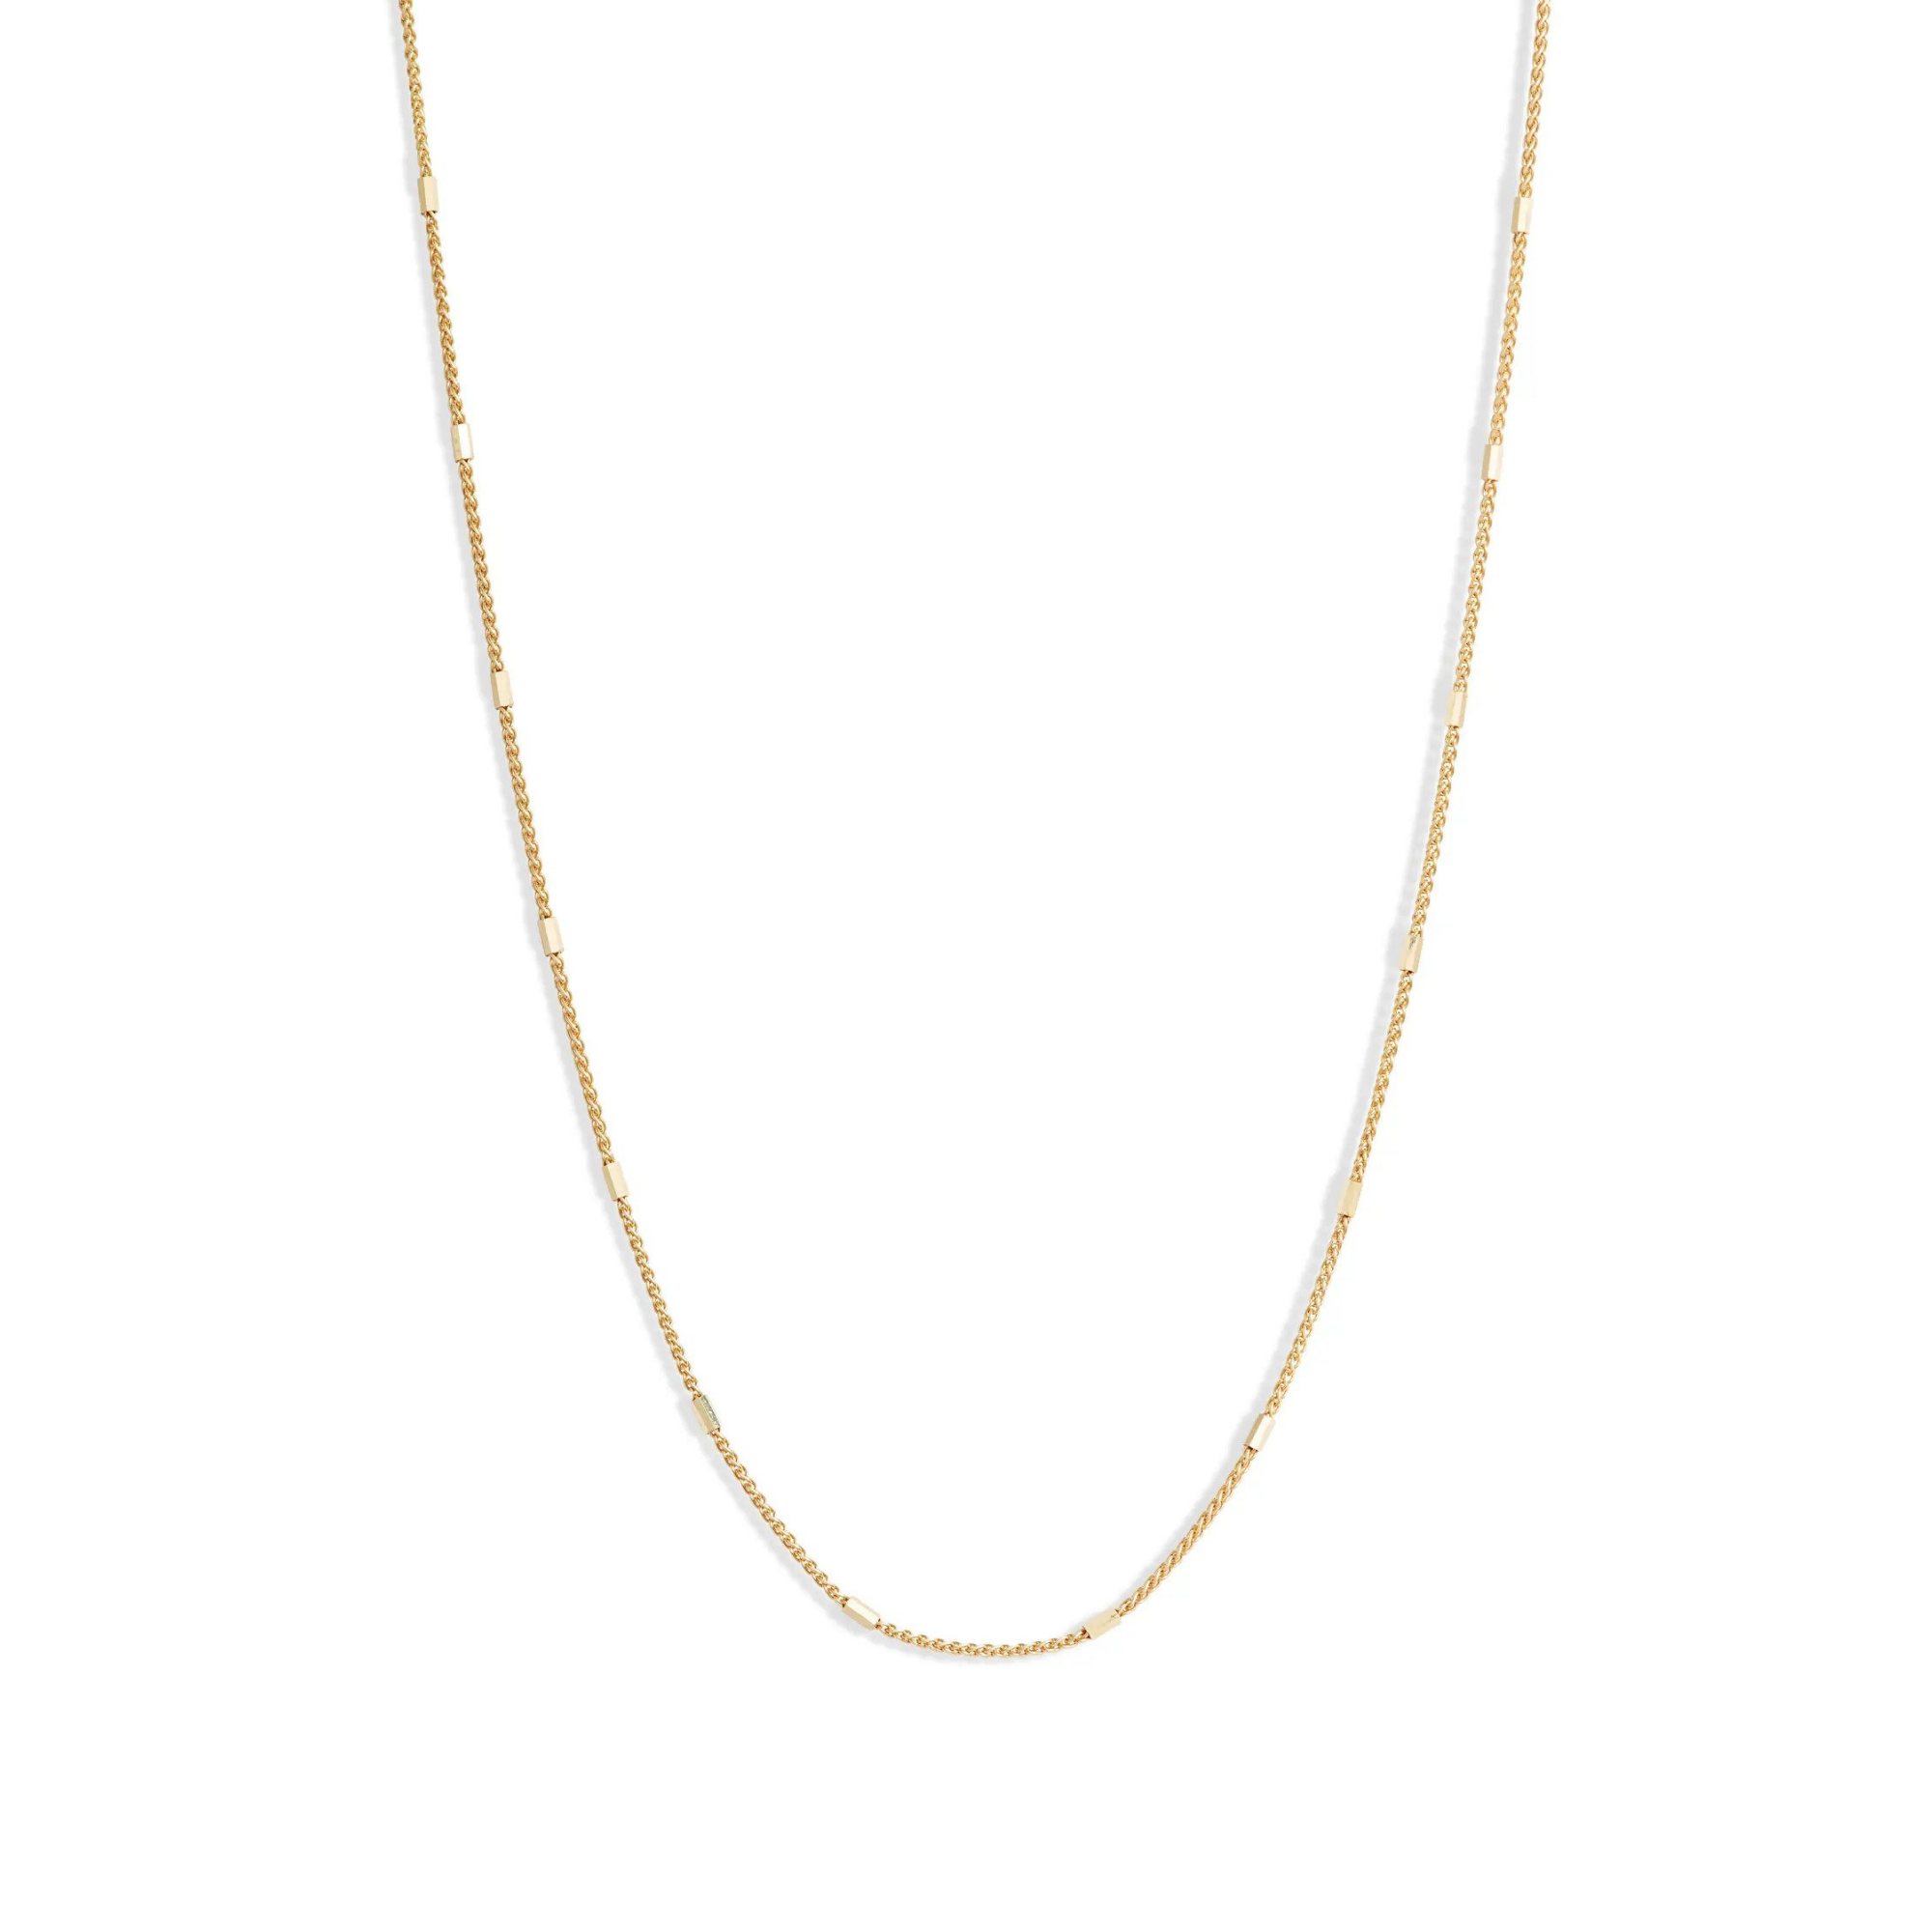 Bony Levy 14K Gold Bar Station Chain Necklace, $240